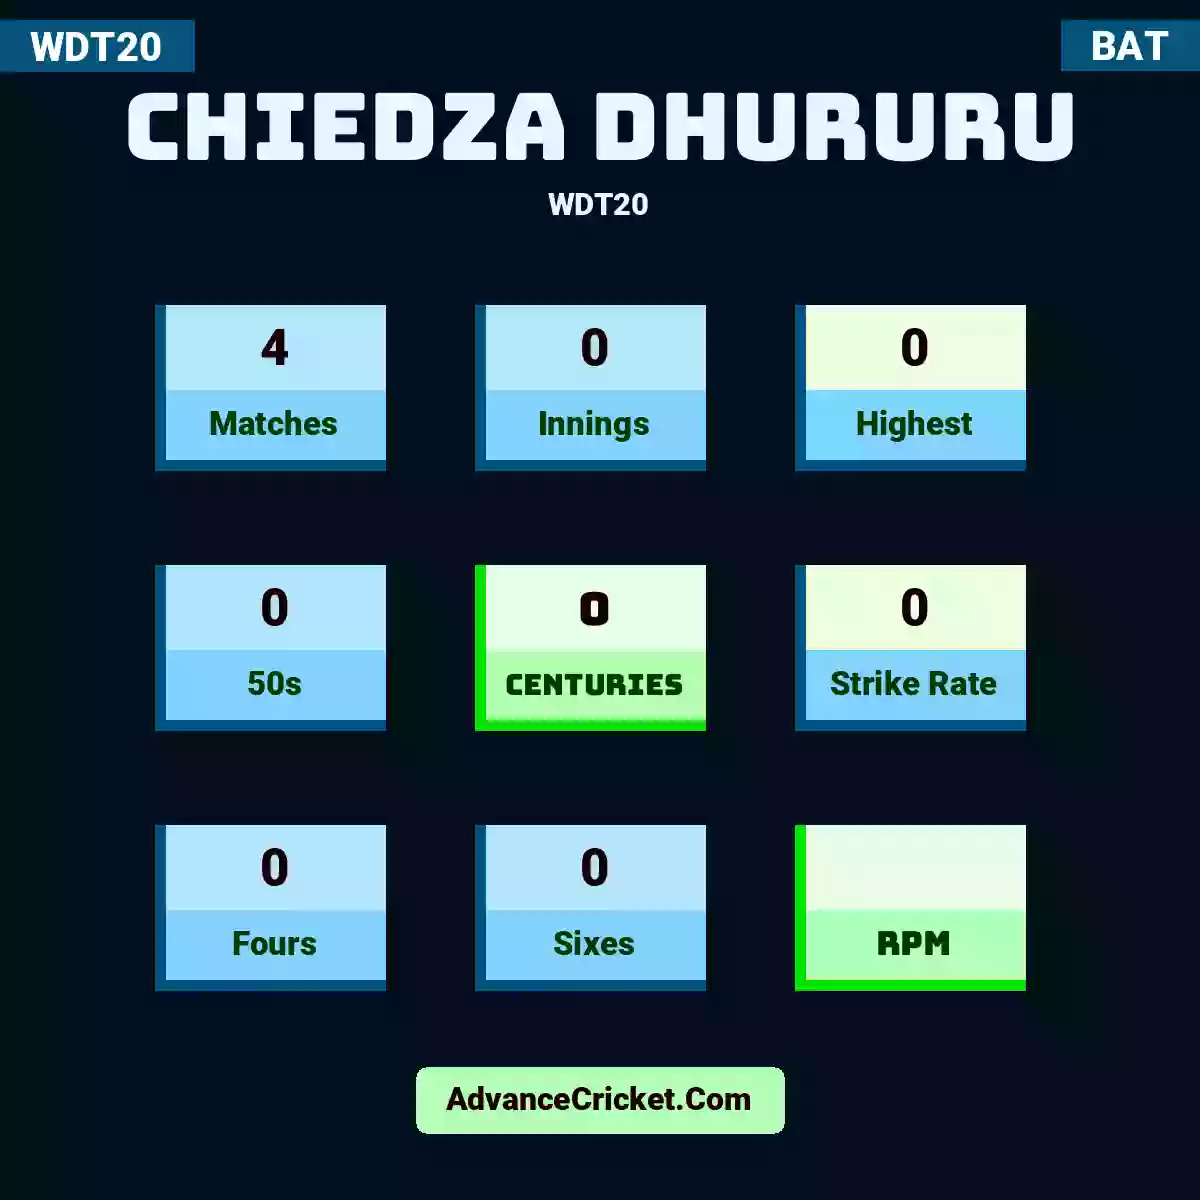 Chiedza Dhururu WDT20 , Chiedza Dhururu played 4 matches, scored 0 runs as highest, 0 half-centuries, and 0 centuries, with a strike rate of 0. C.Dhururu hit 0 fours and 0 sixes.